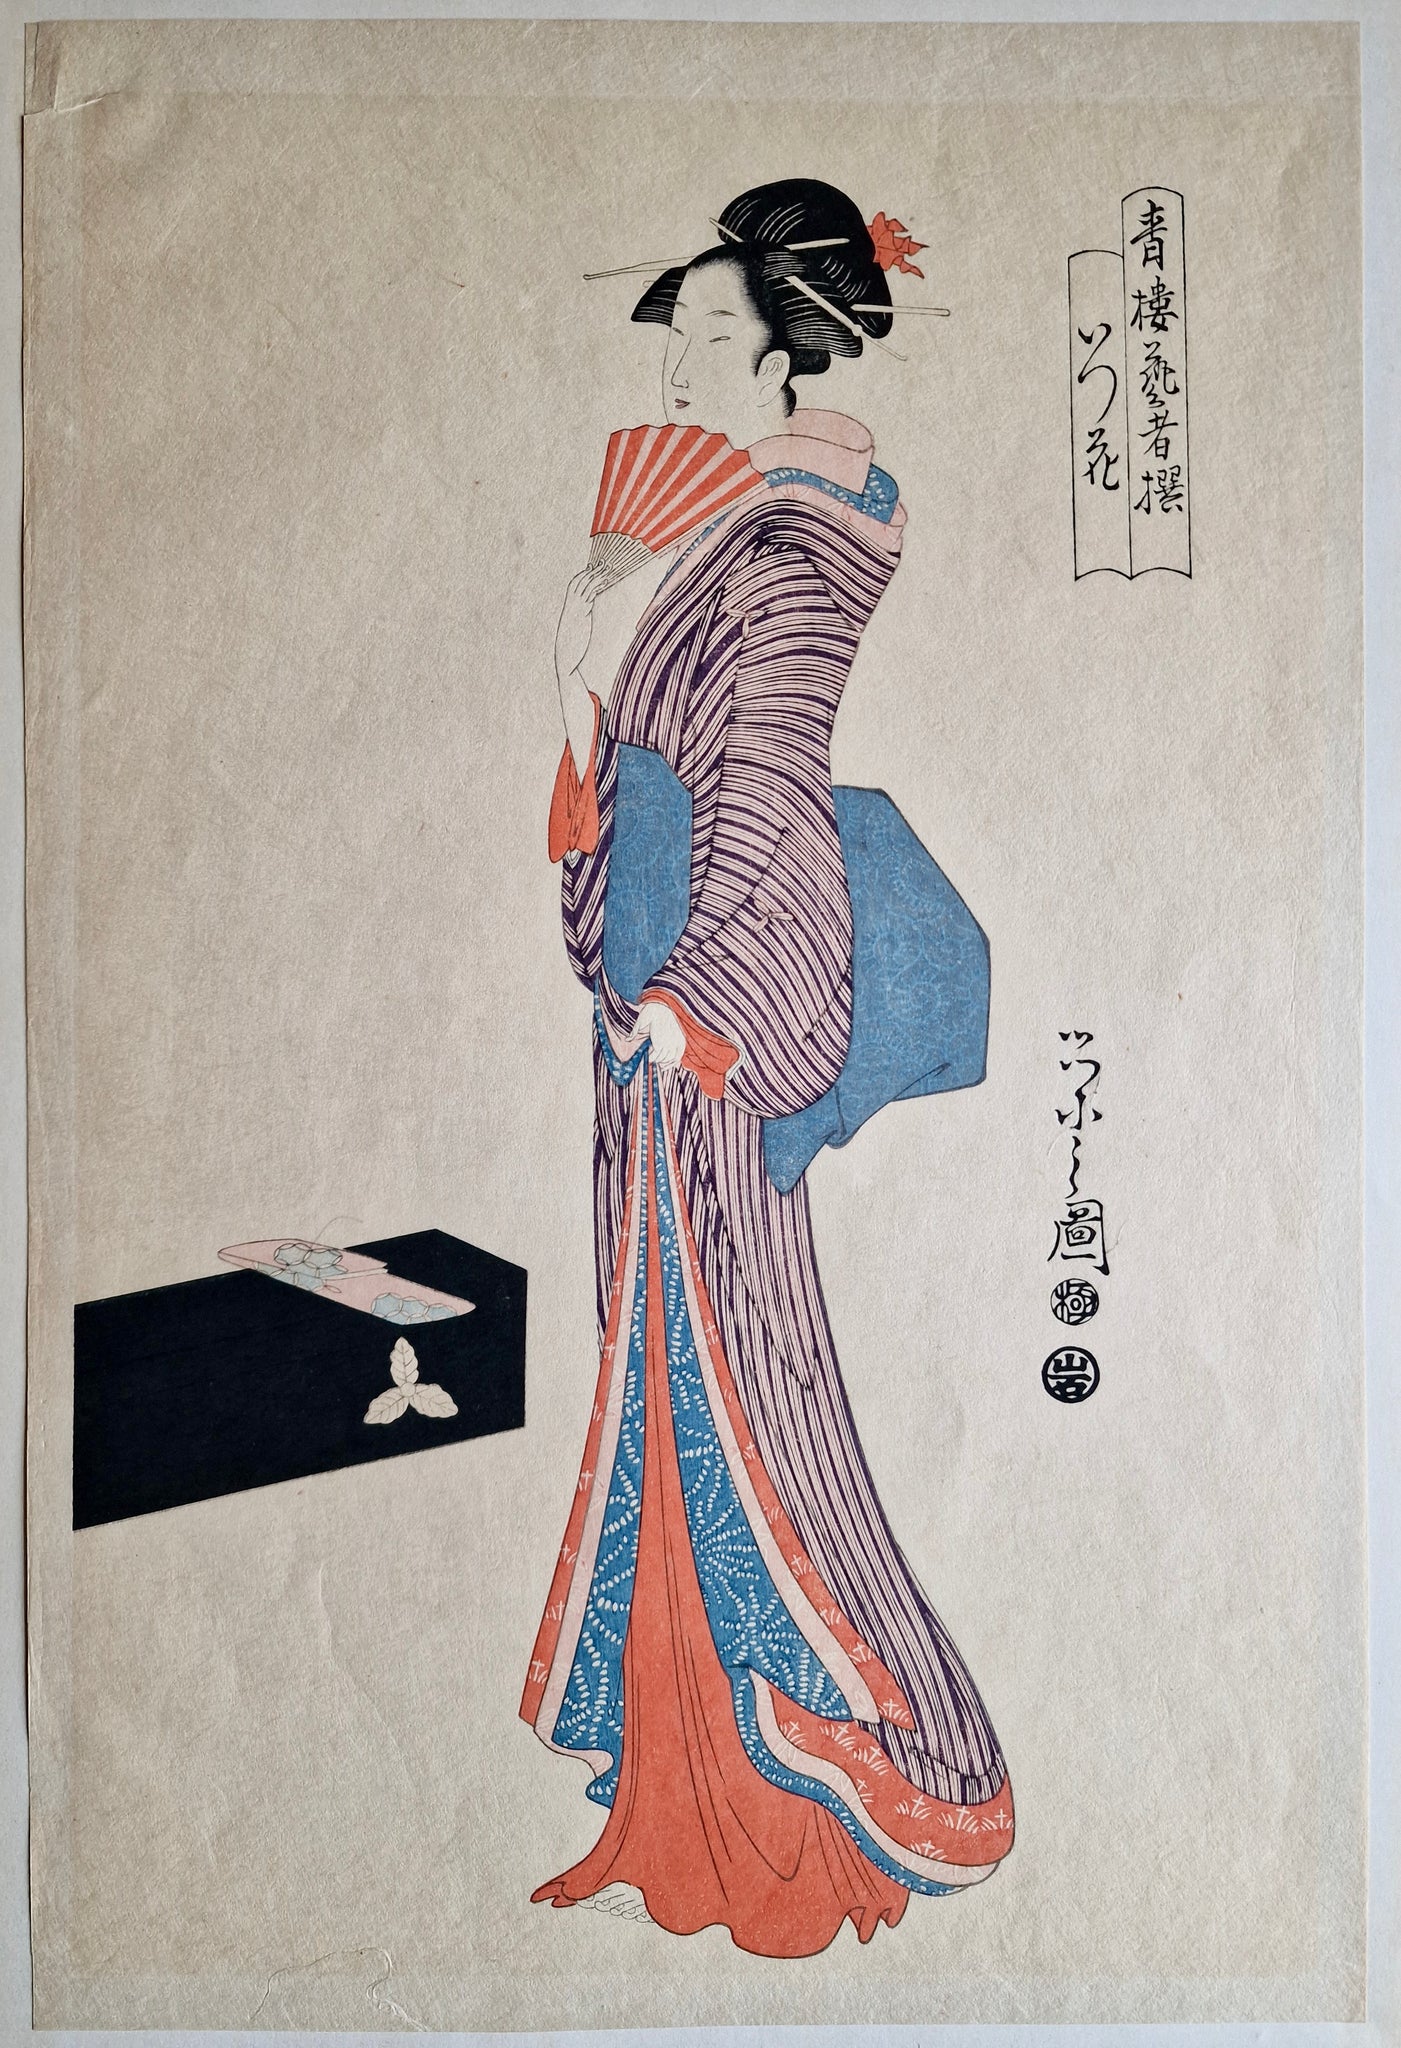 Woodblock Print Hosoda Eishi "Itsuhana" - Japan